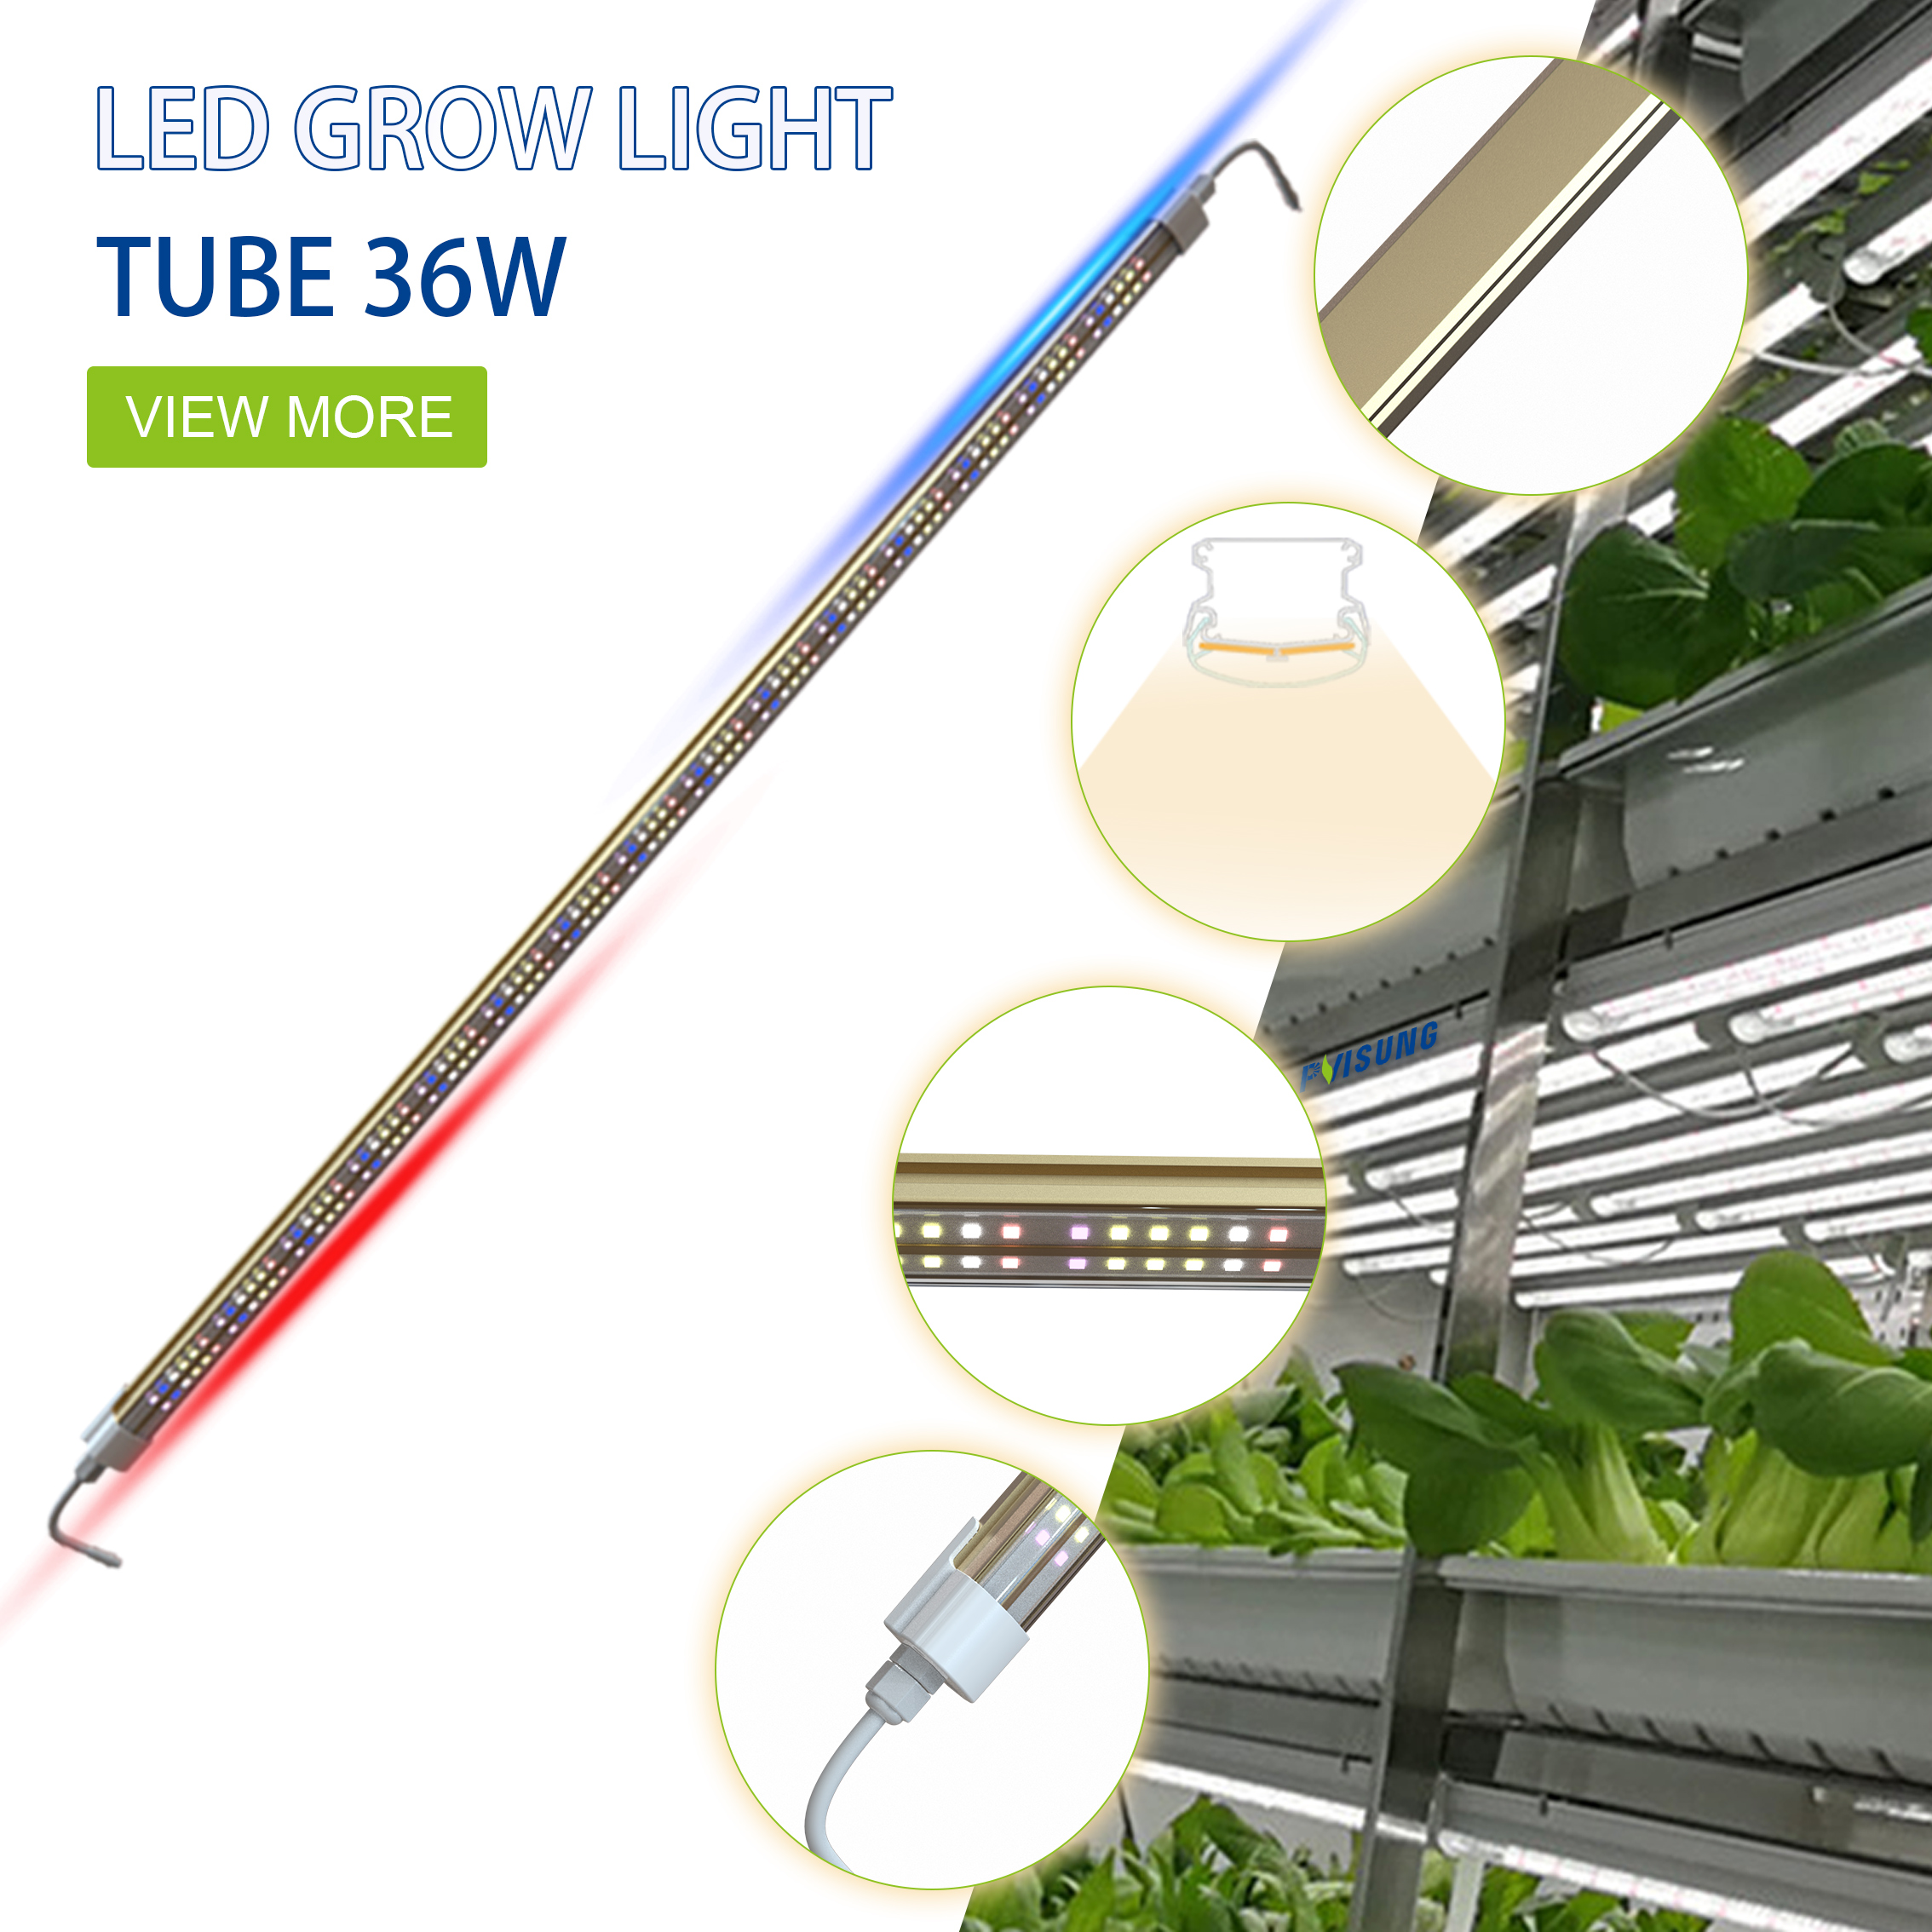 Tube LED grow light (1)